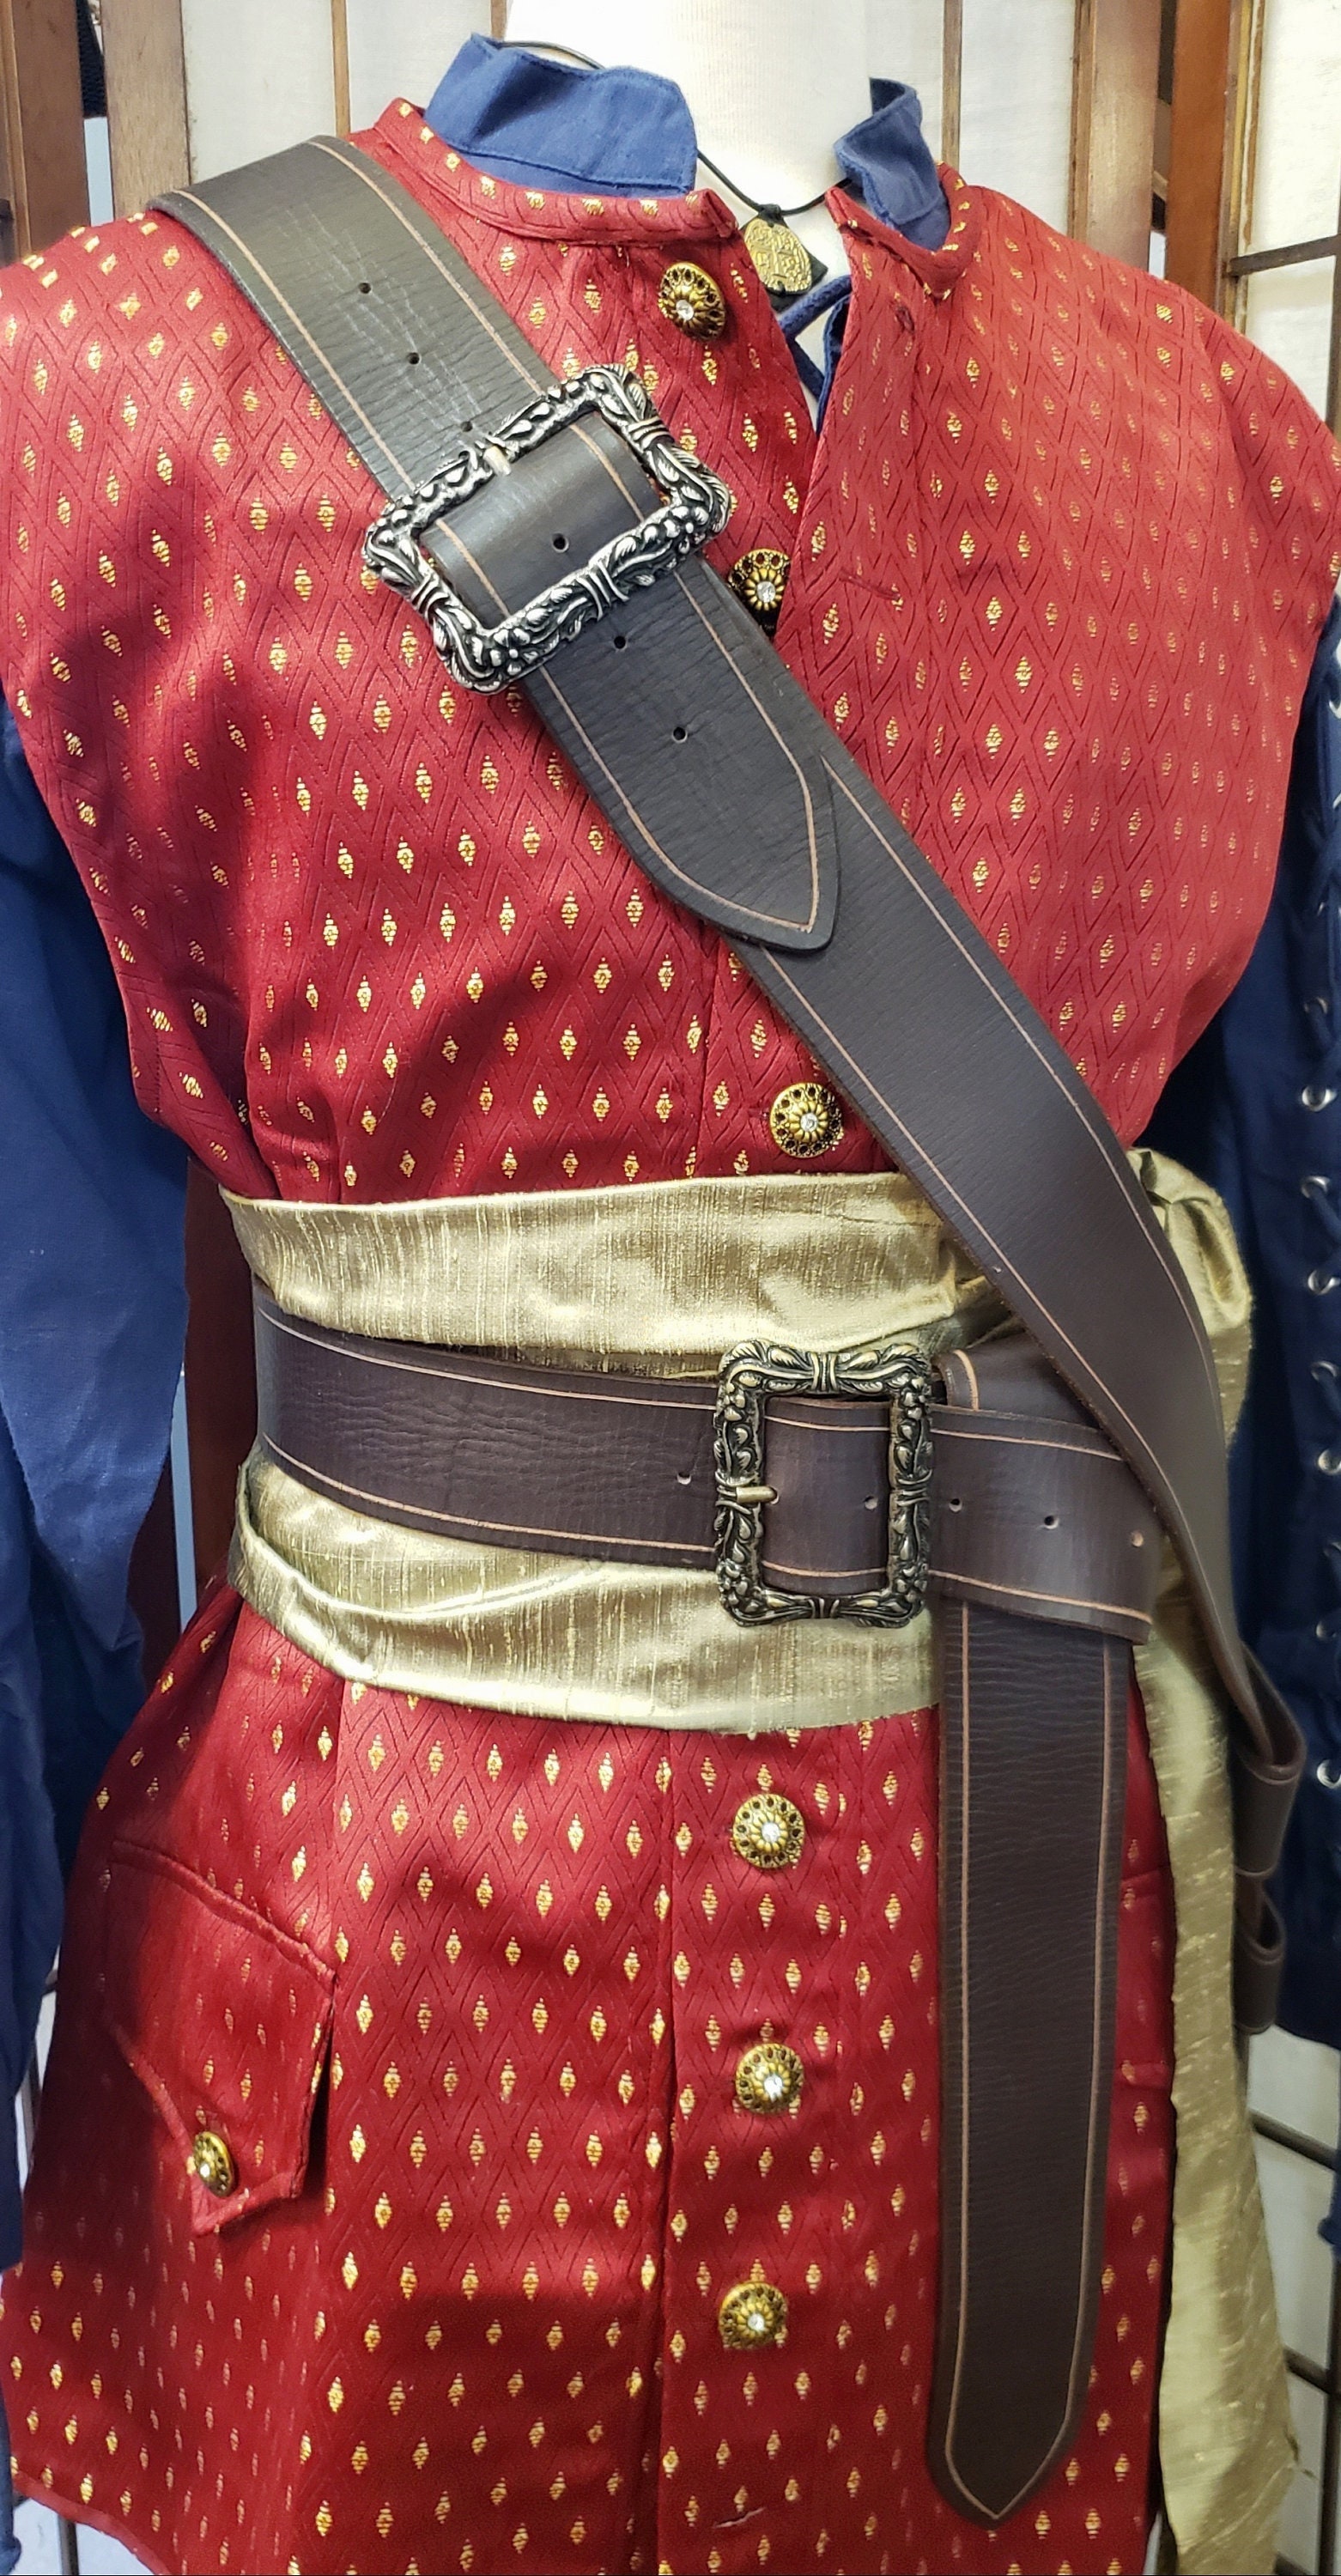 Jiuguva Pirate Bandolier Belt Viking Belt Flintlock Pistol Strap Halloween Costume Accessory for Men Women Adults Knight Assassin Warrior Pirate